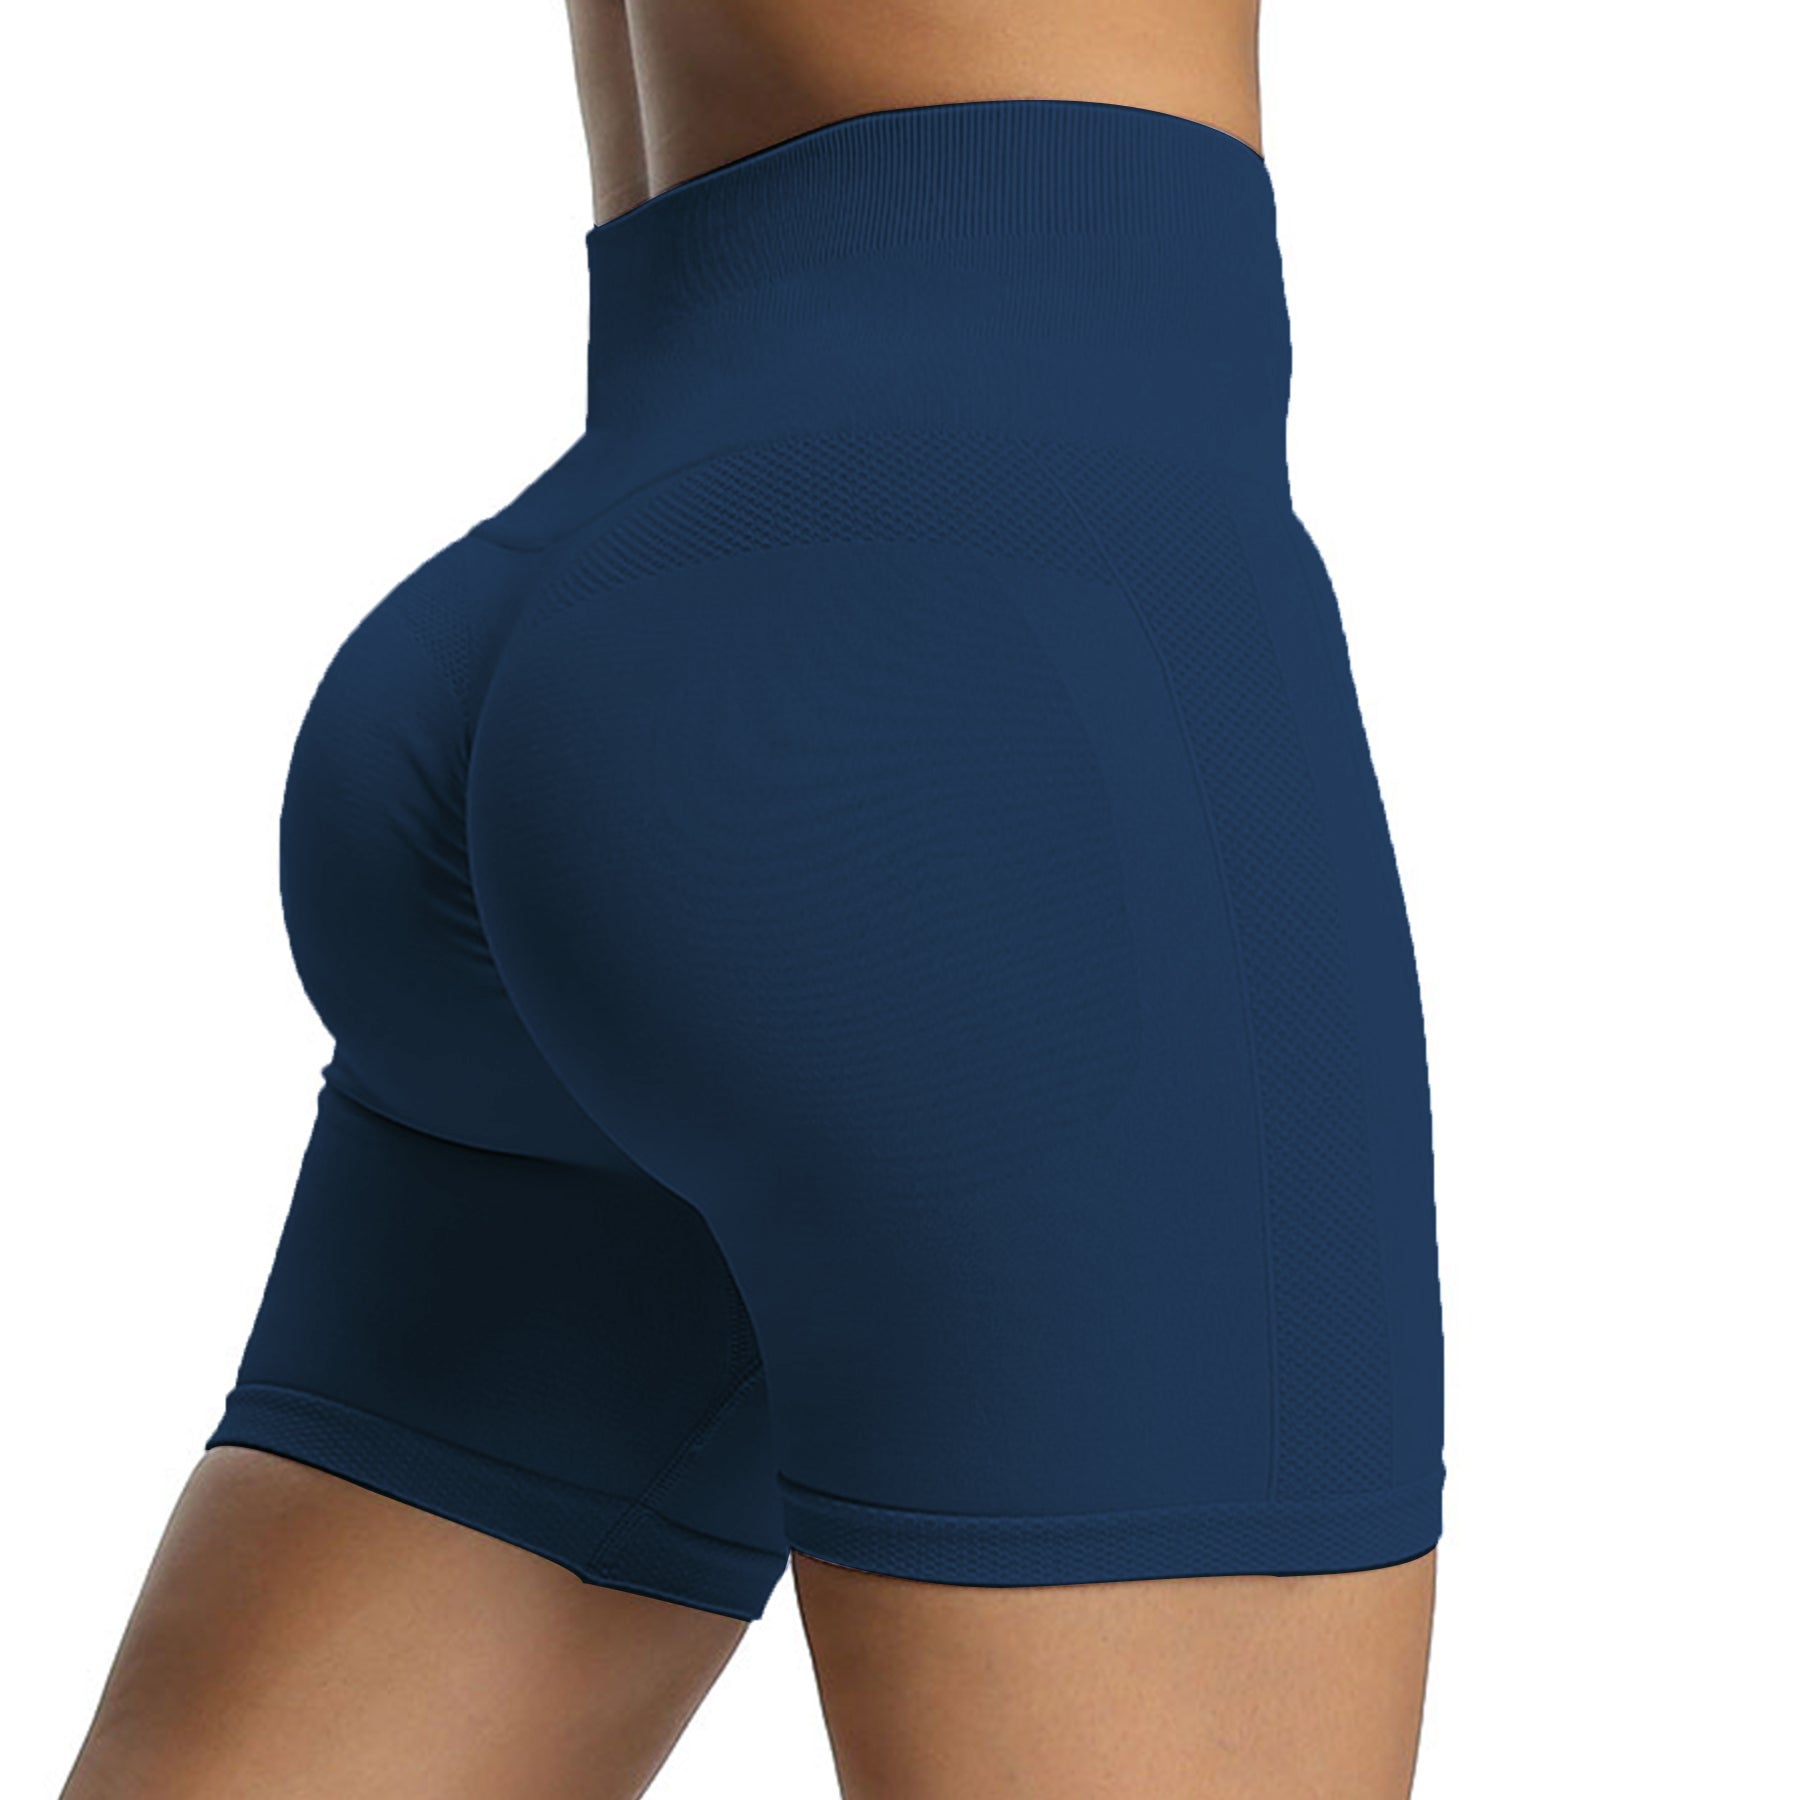 Aoxjox Seamless V-Seam Scrunch Shorts